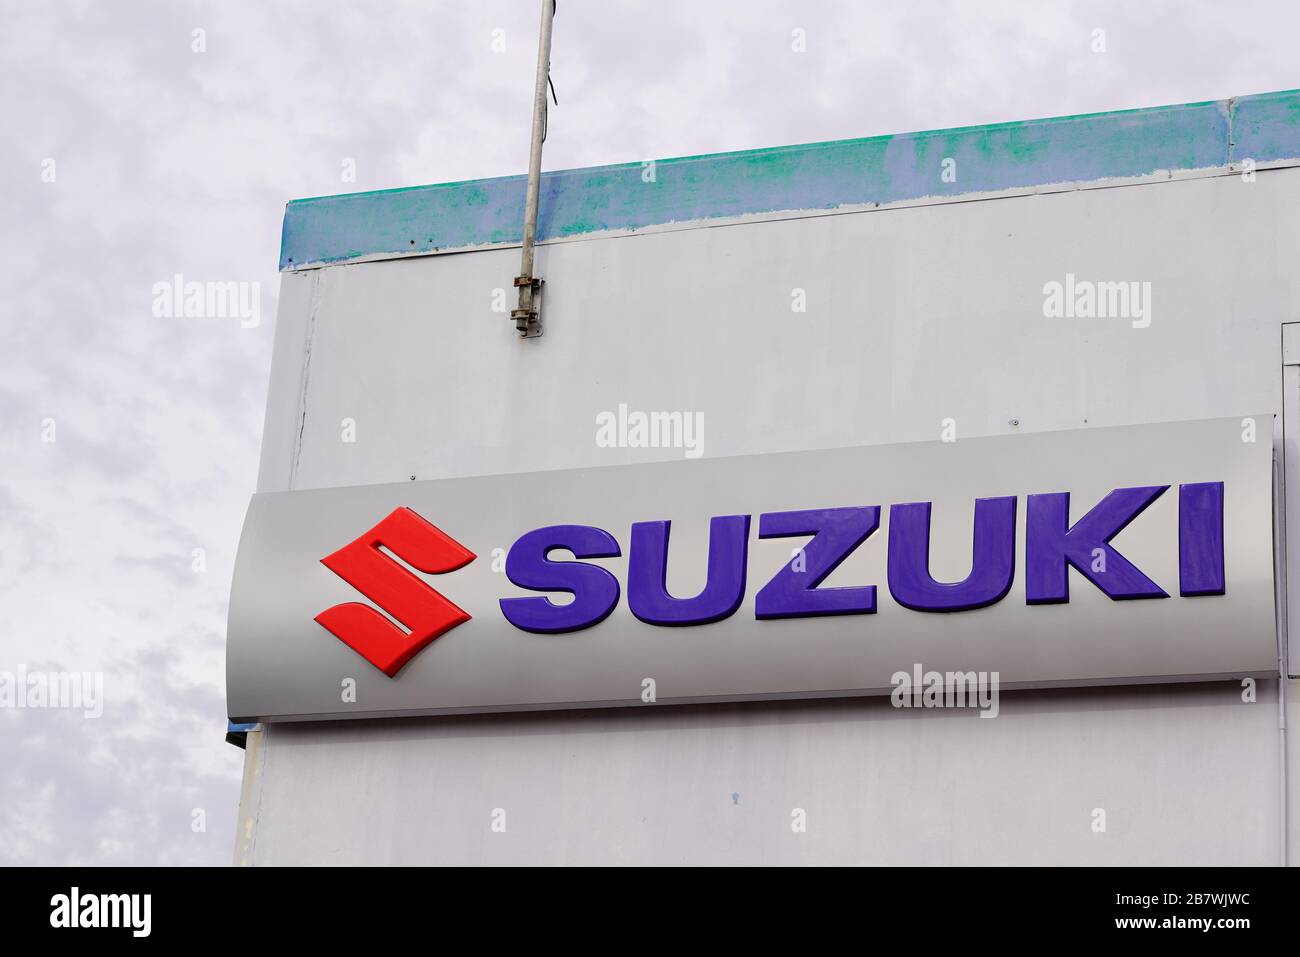 SUZUKI MOTORBIKE LOGO LED LIGHT BOX SIGN PETROL GARAGE AUTOMOBILIA ADVETRISING 